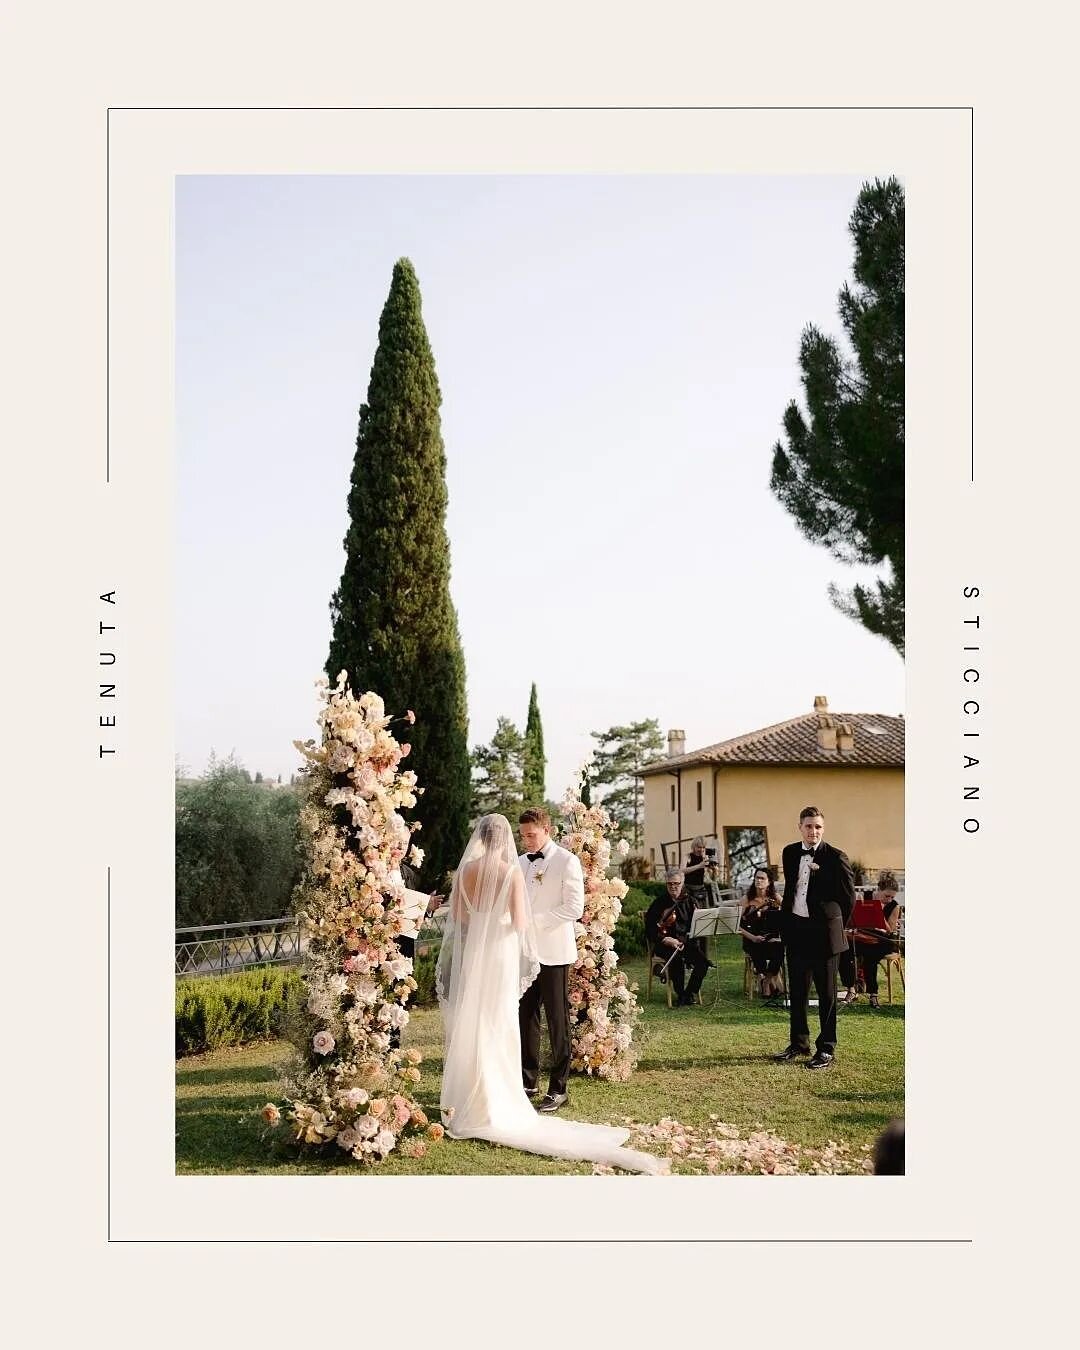 Some more memories from J&amp;G's Tuscan wedding
in Villa Sticciano🍷🍷🍾

Planning @paolocicognani_weddingsitaly
Florist @stiatti_fiori_
Muah @barbaracorso_ @theporfirio
Venue @tenutasticciano
Video @2become1video
Celebrant @blessingsfromitaly
2nd s